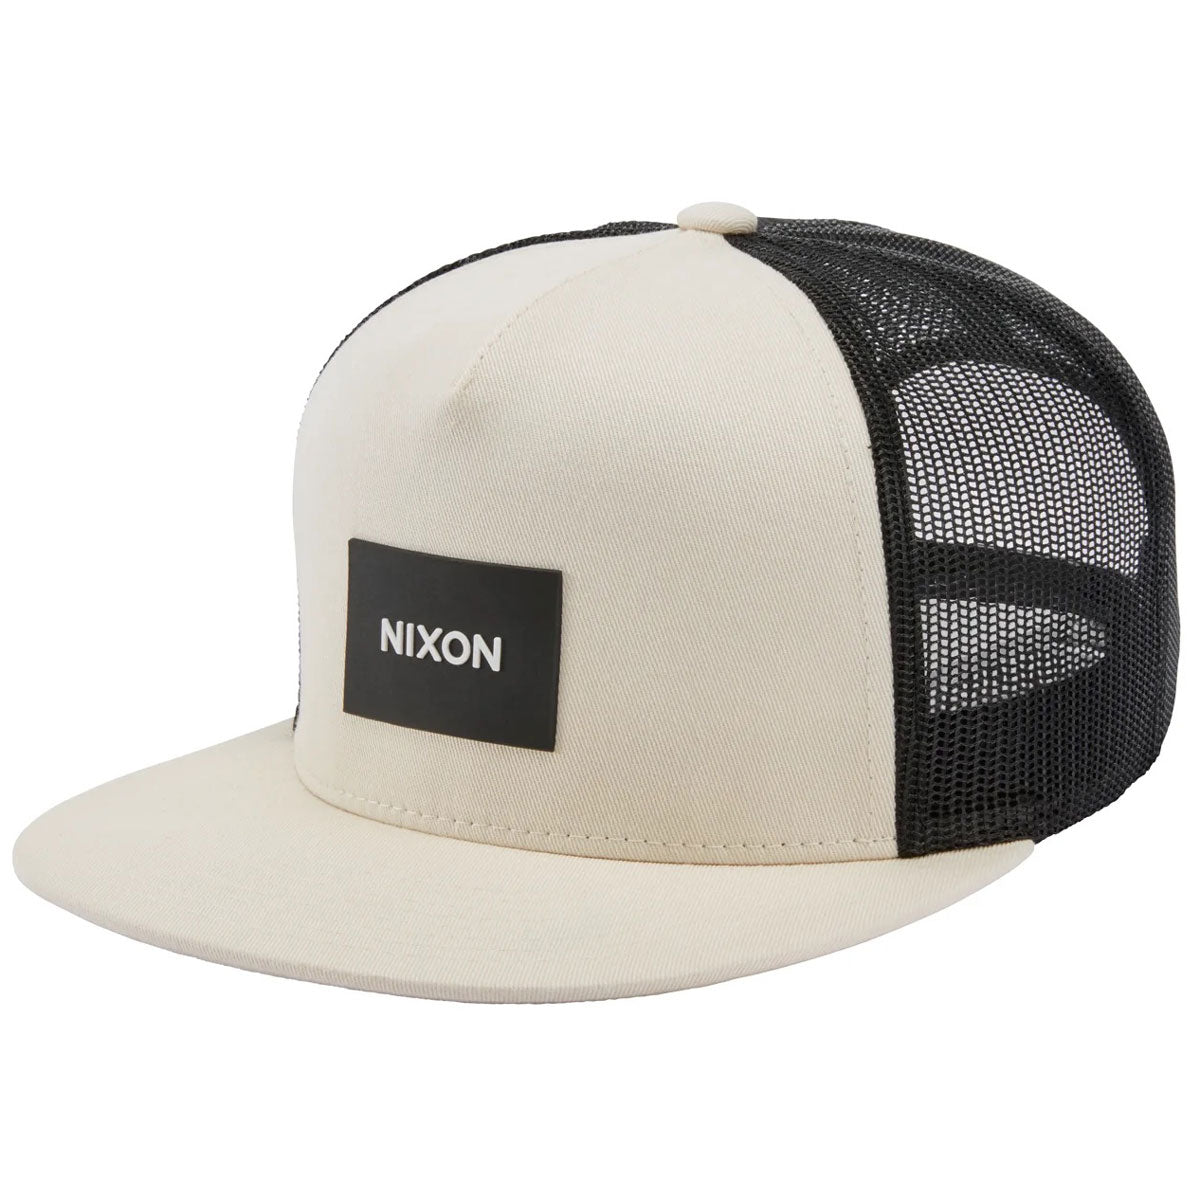 Nixon Team Trucker Hat - Cream/Black image 1